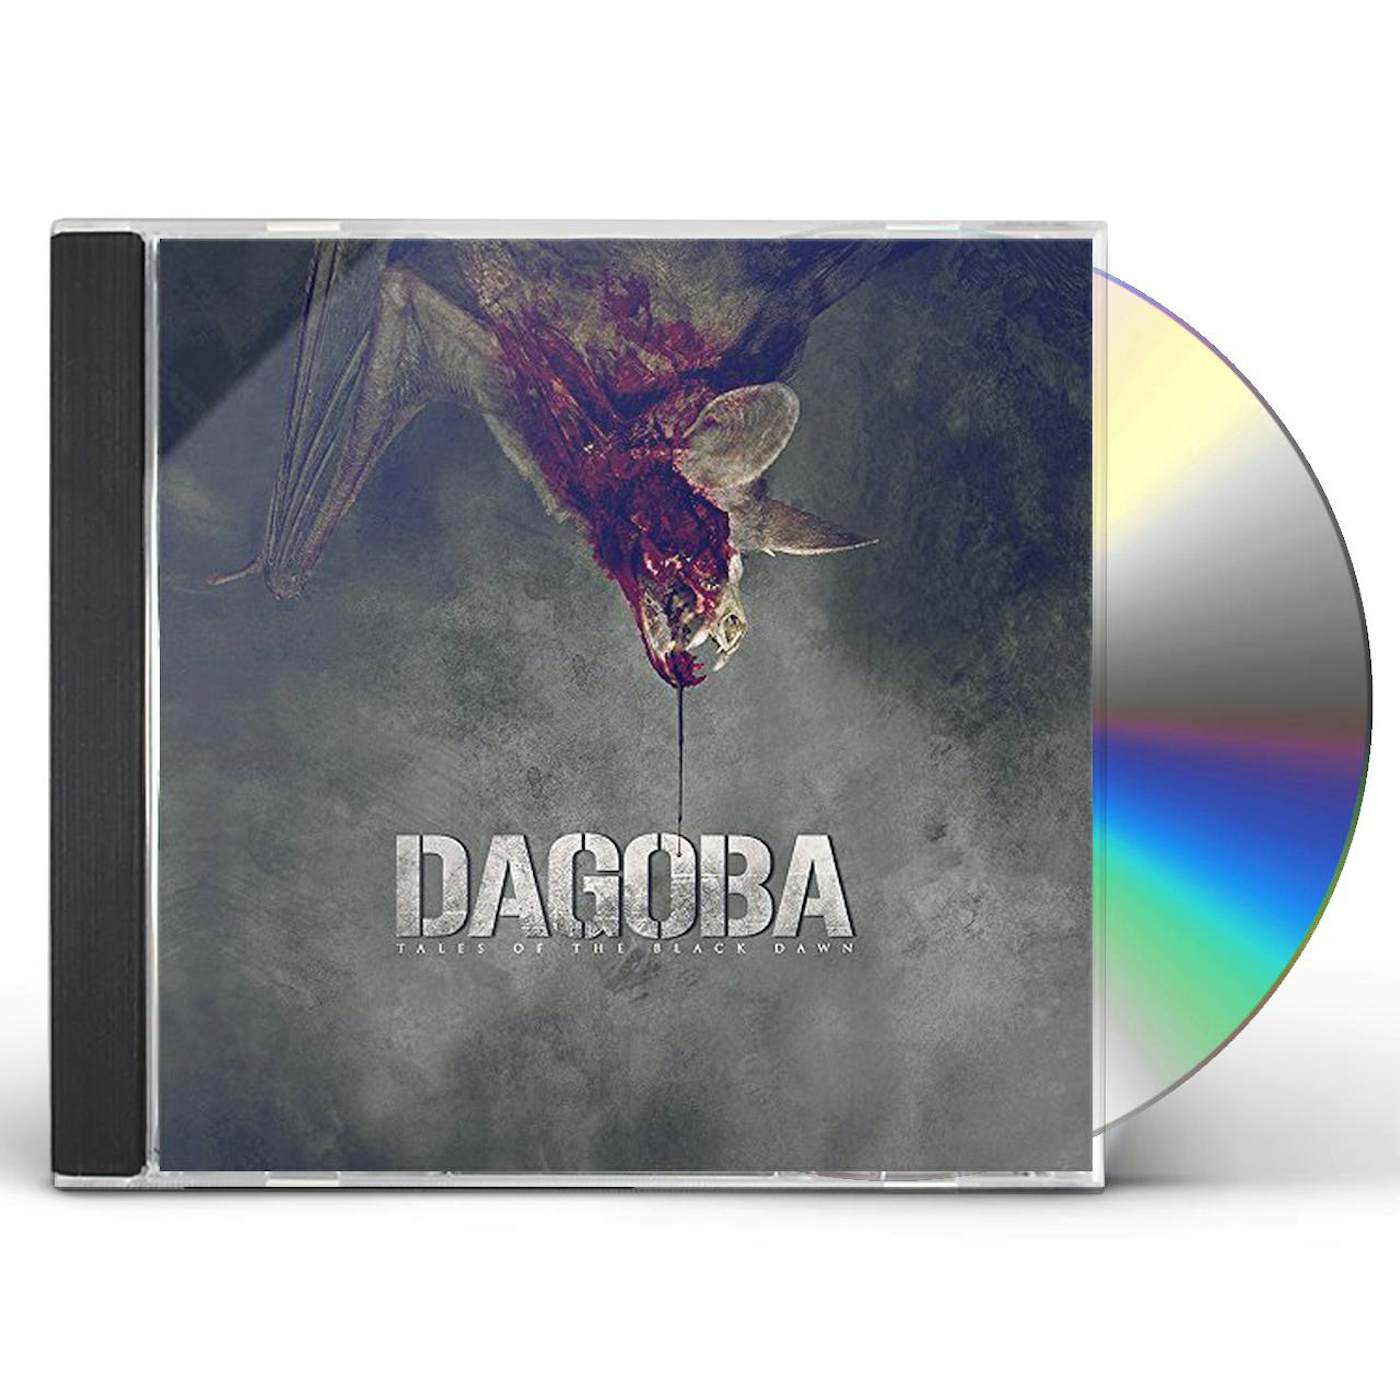 Dagoba TALES OF THE BLACK DAWN CD